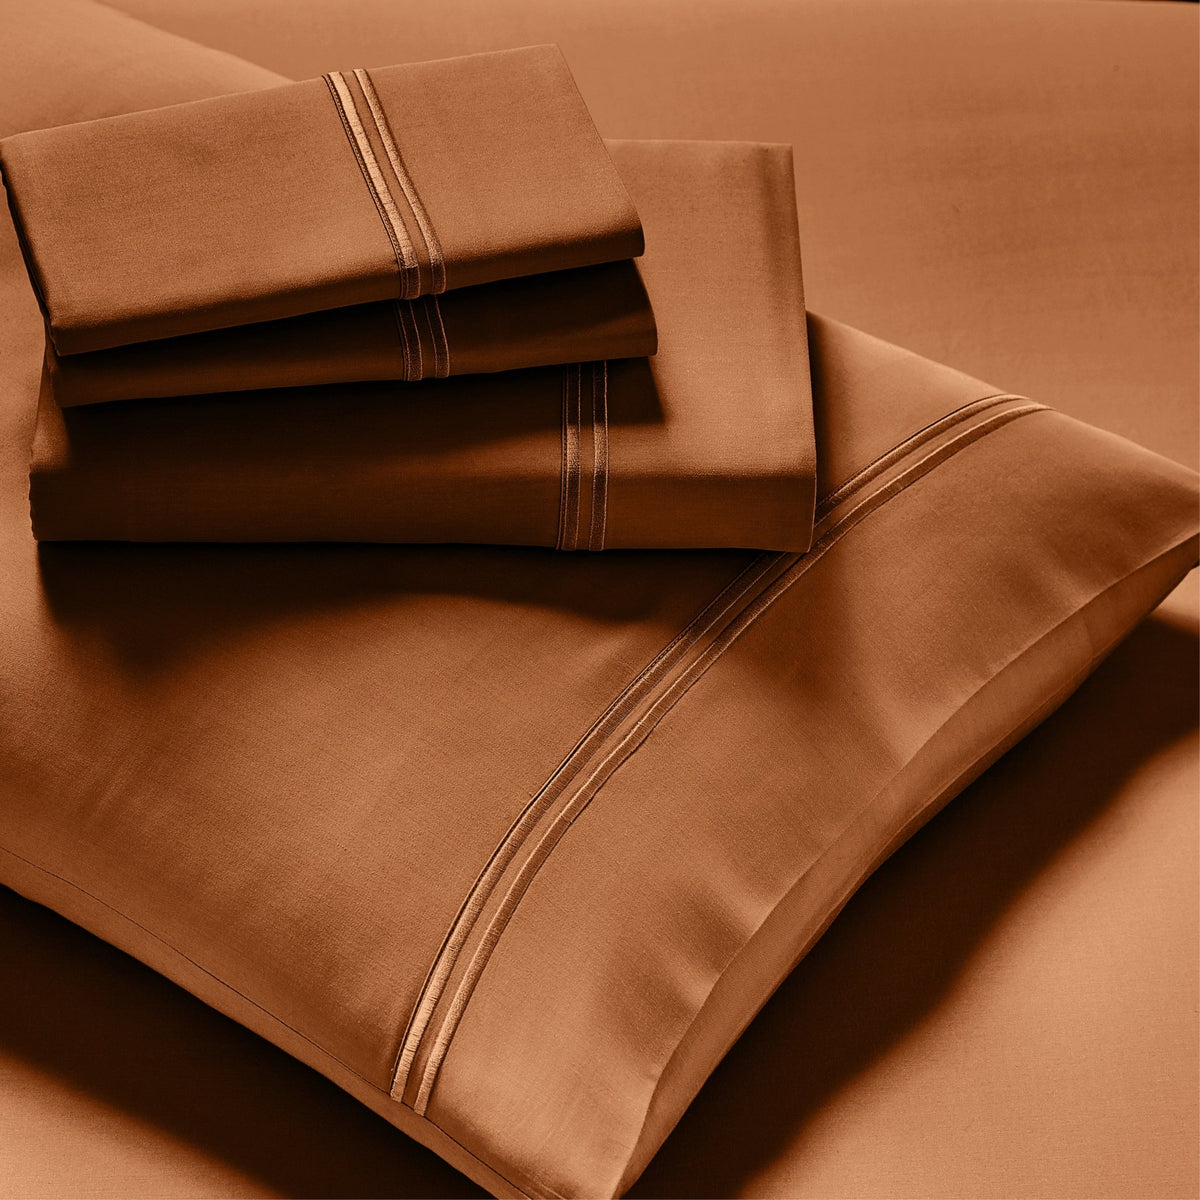 Fabrictech Luxury Microfiber Sheet Set, Mattresses